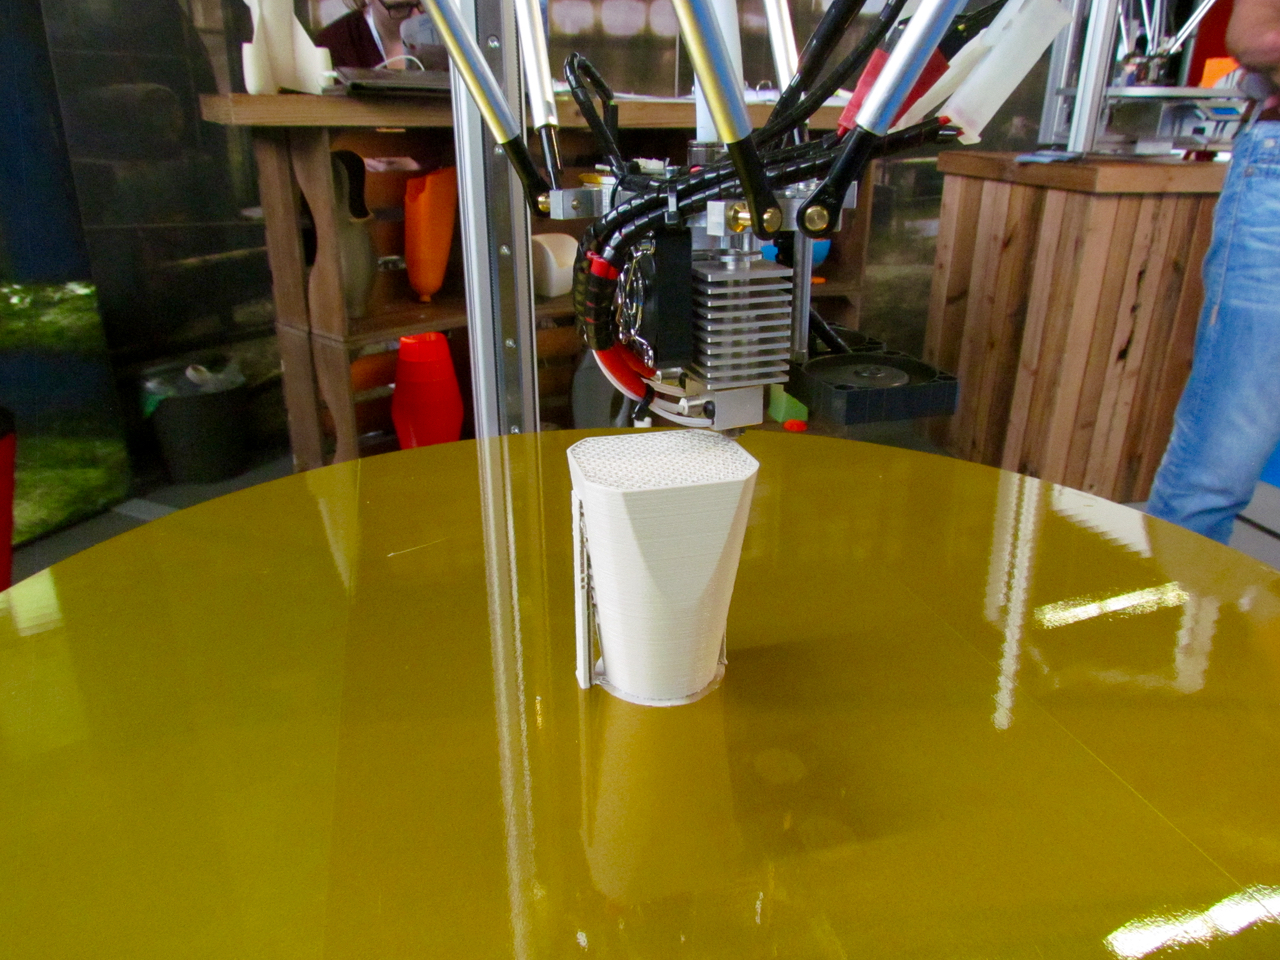  A Deltatower 3D printer producing an object 